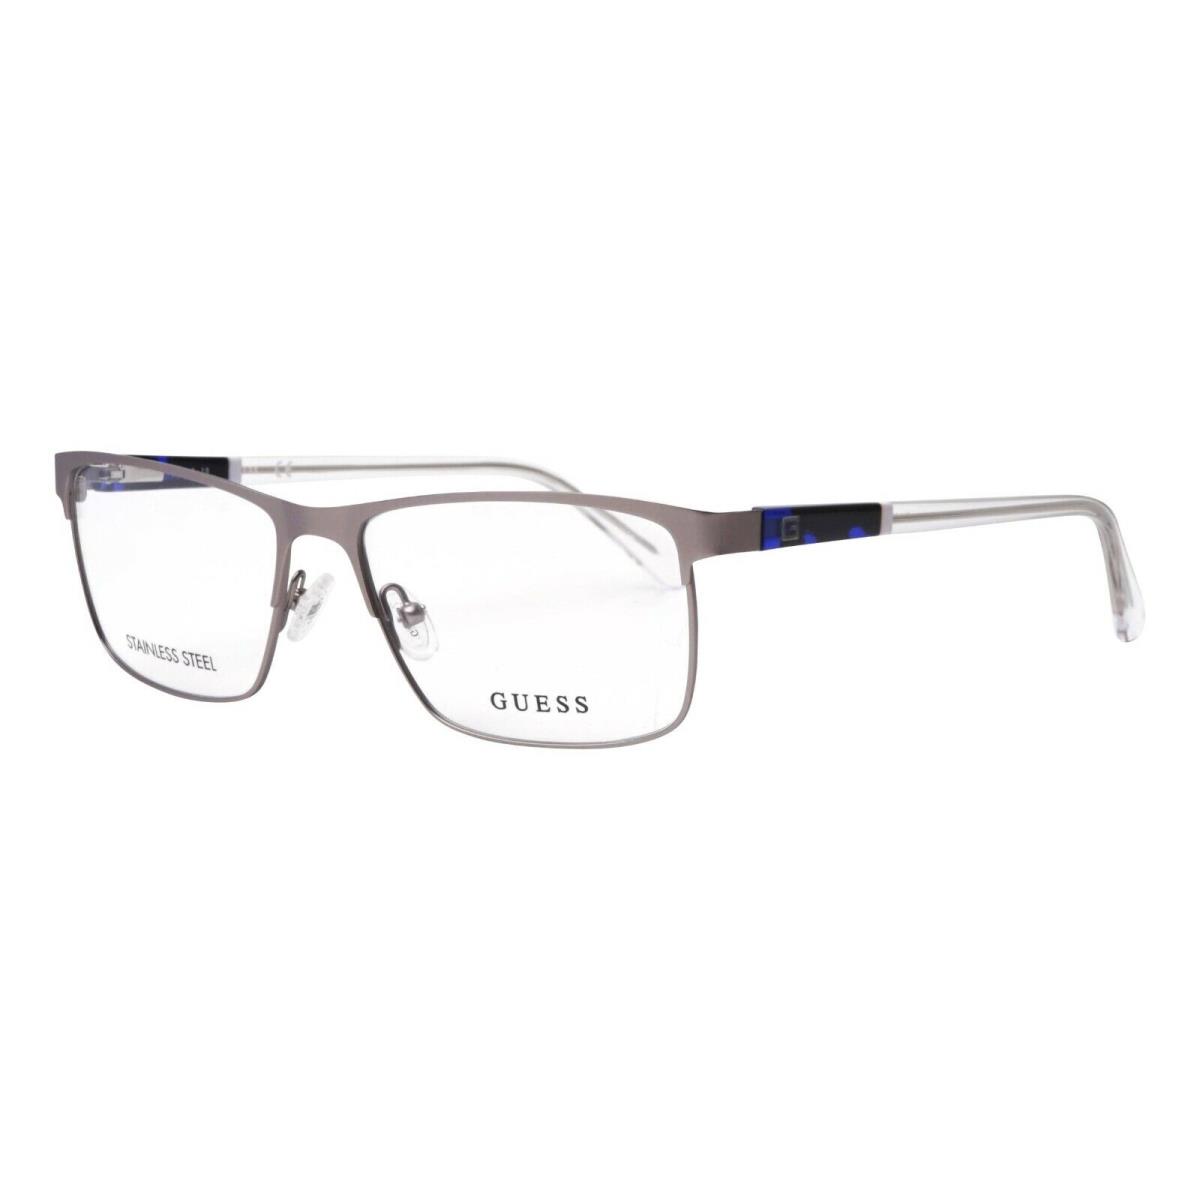 Guess GU1972 Matte Silver 007 Metal Optical Eyeglasses Frame 53-15-145 1972 - Silver, Frame: Silver, Lens: